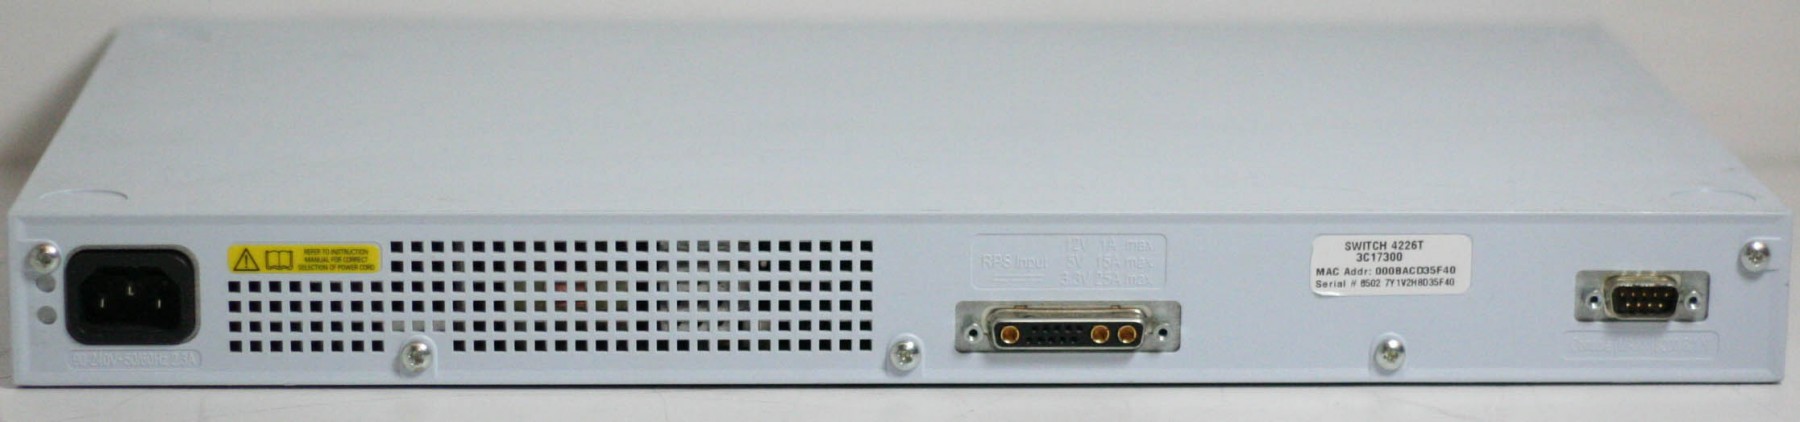 1000475-3COM SuperStack 3 Switch 4226T 3C17300 -image